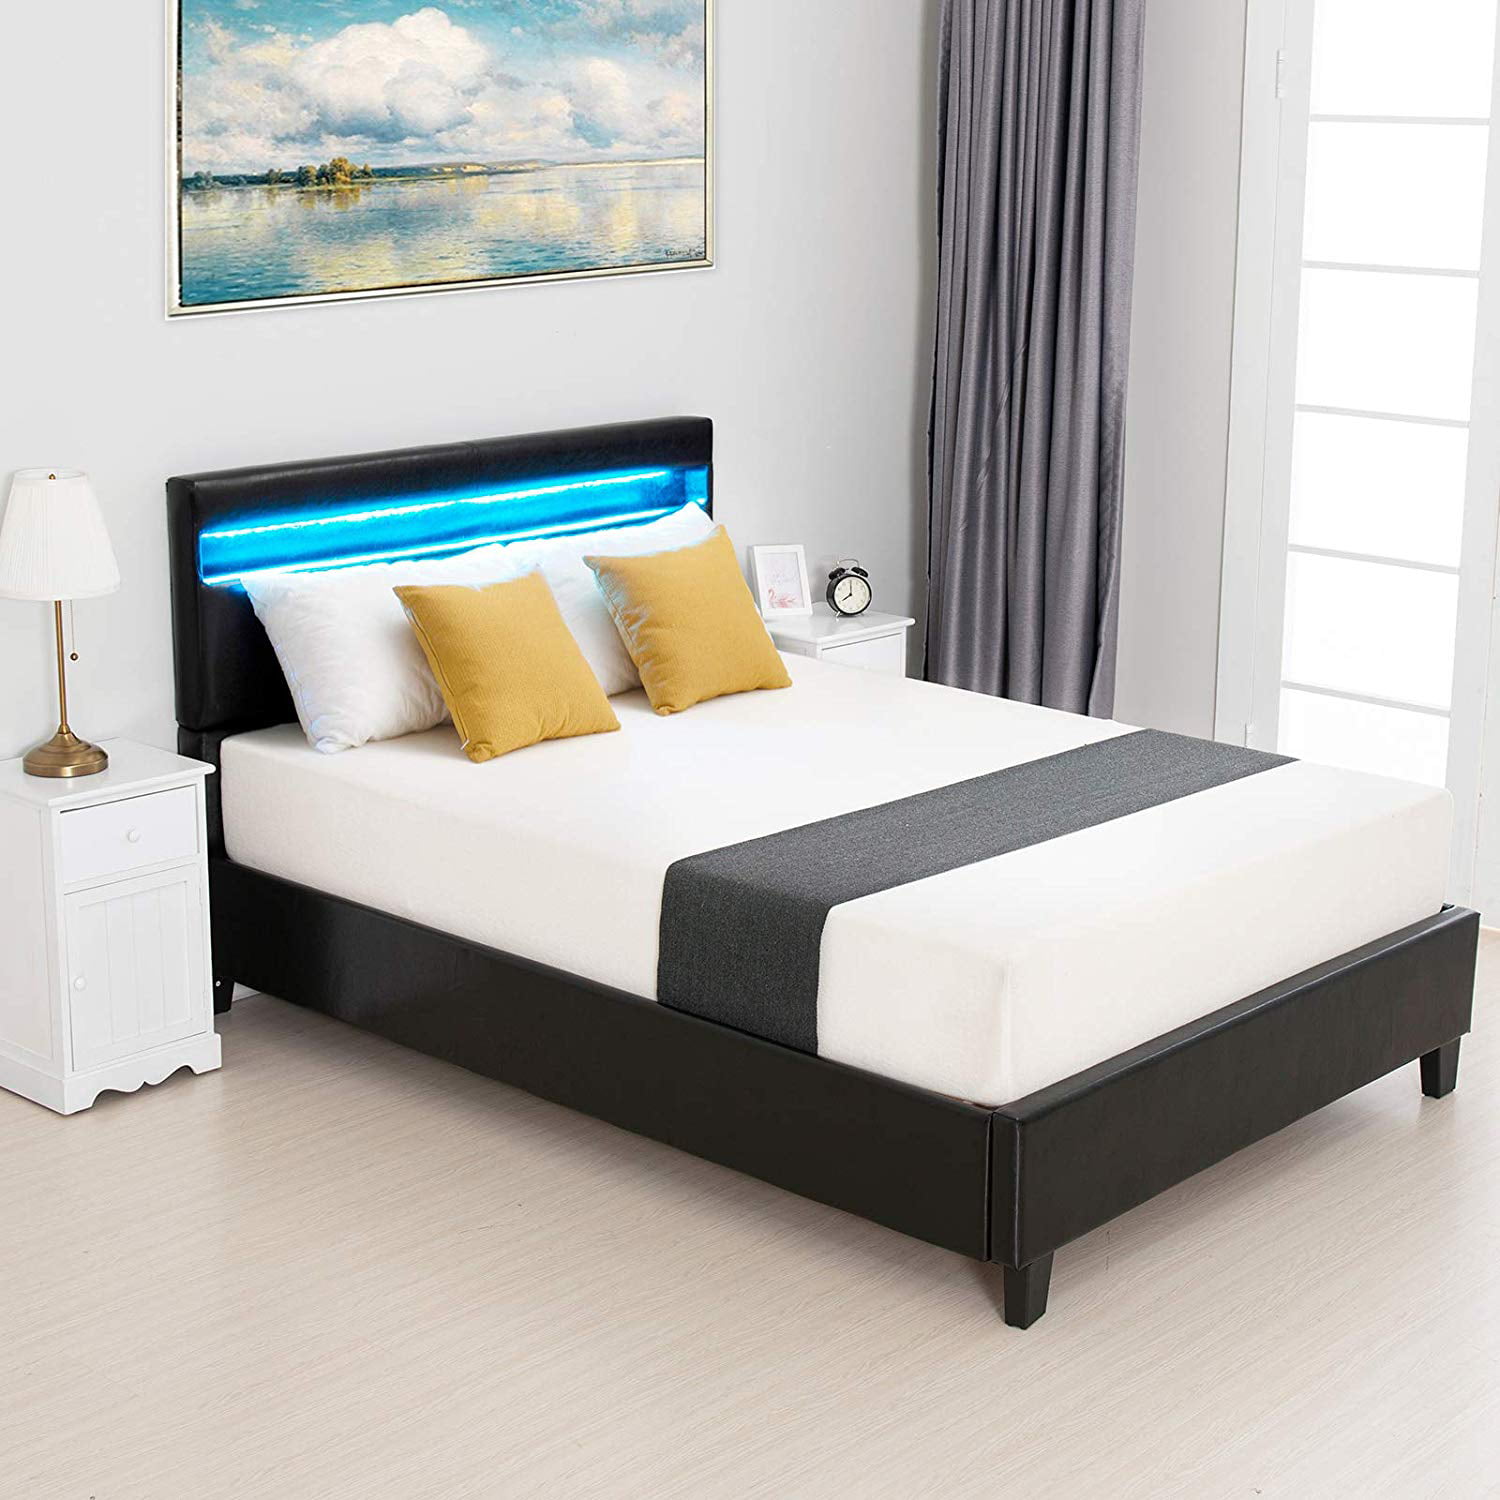 Mecor Modern Upholstered Faux Leather Platform Bed with LED Light